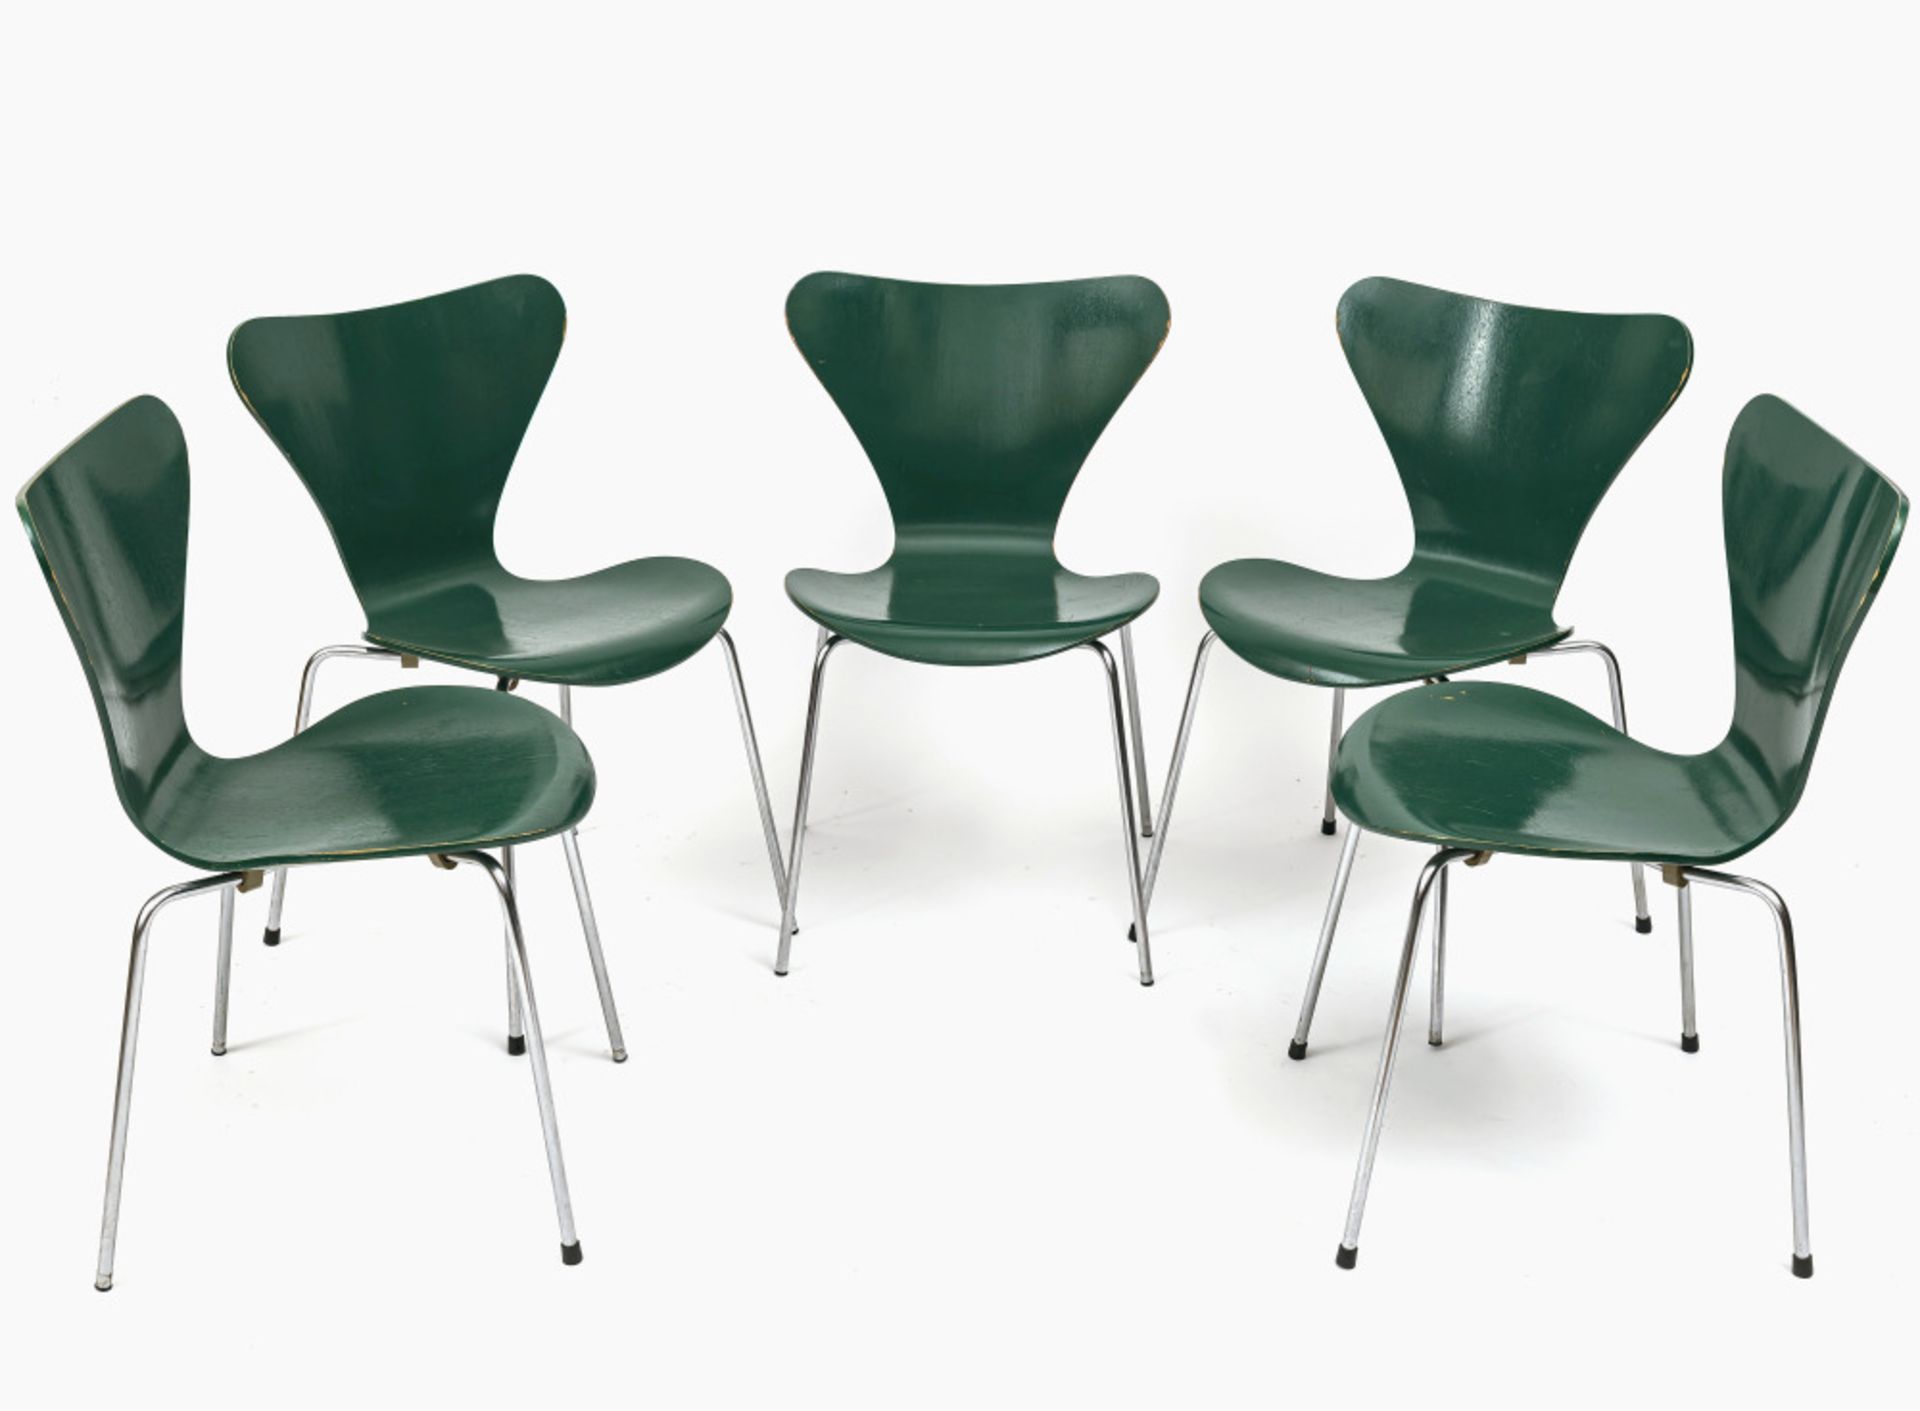 Five stacking chairs - Arne Jacobsen for Fritz Hansen. Series 7, 1973